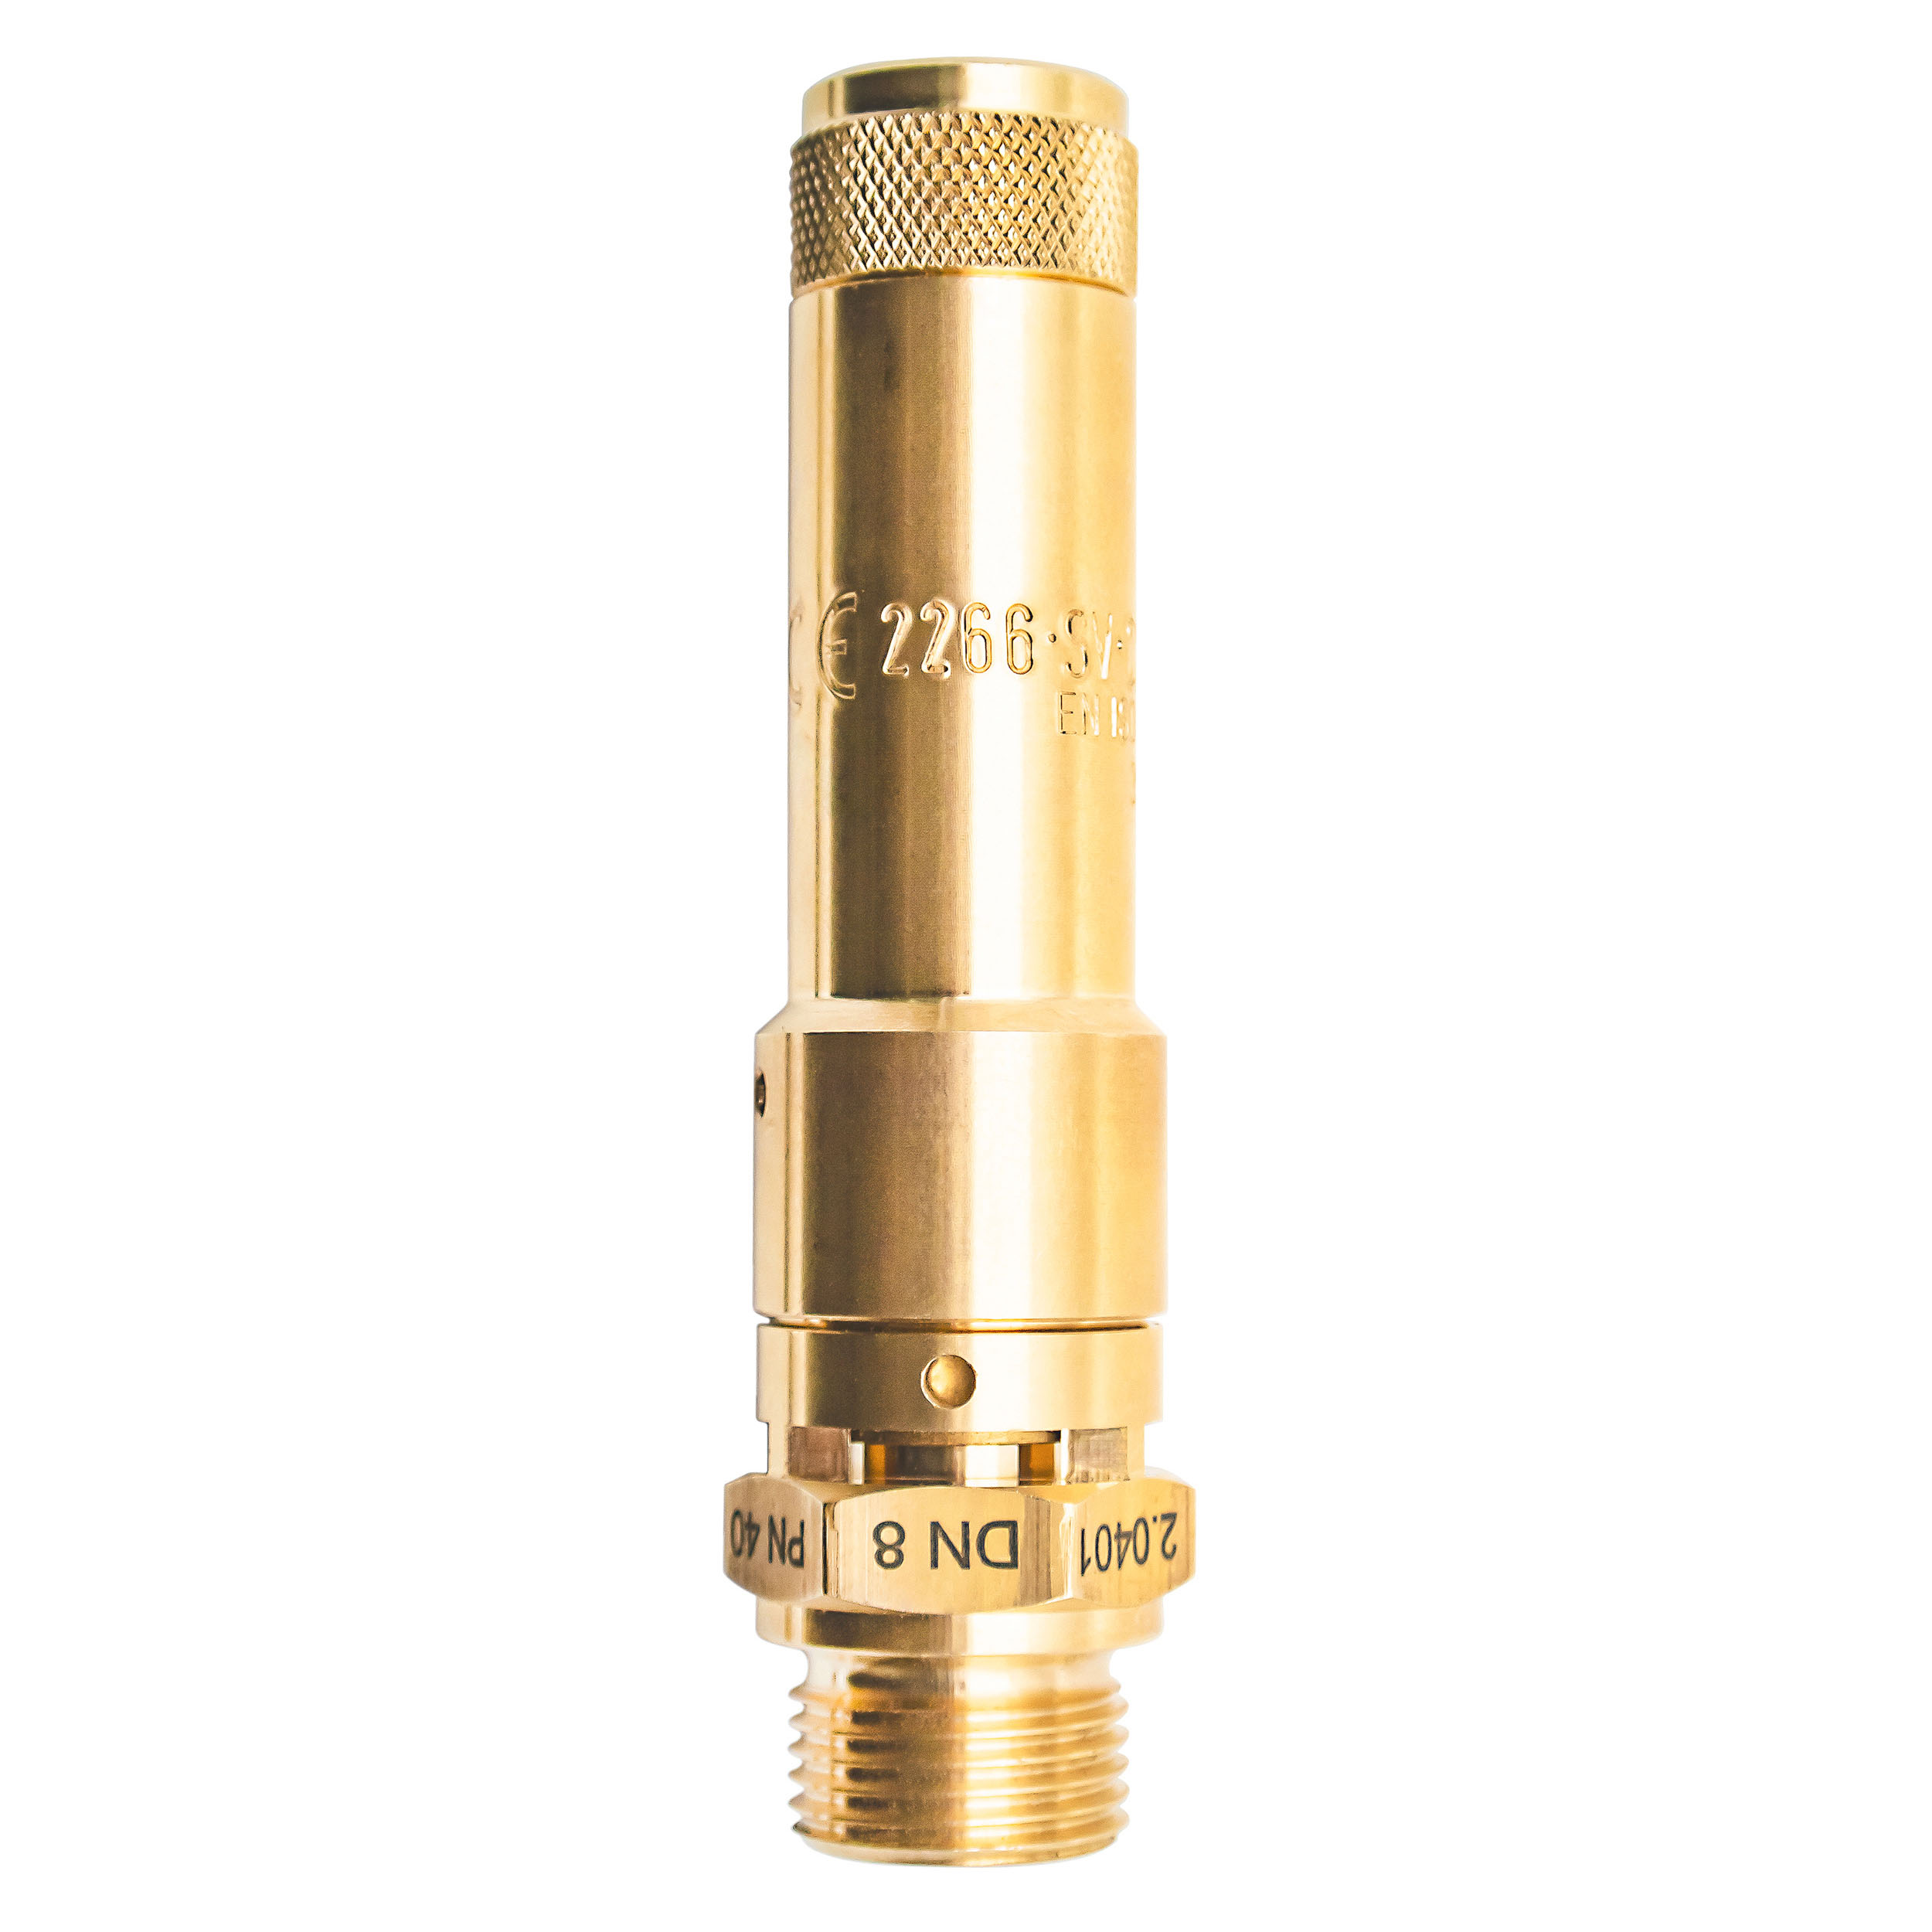 Savety valve component tested DN 8, G½, set pressure: 14.4 bar (208,8 psi)